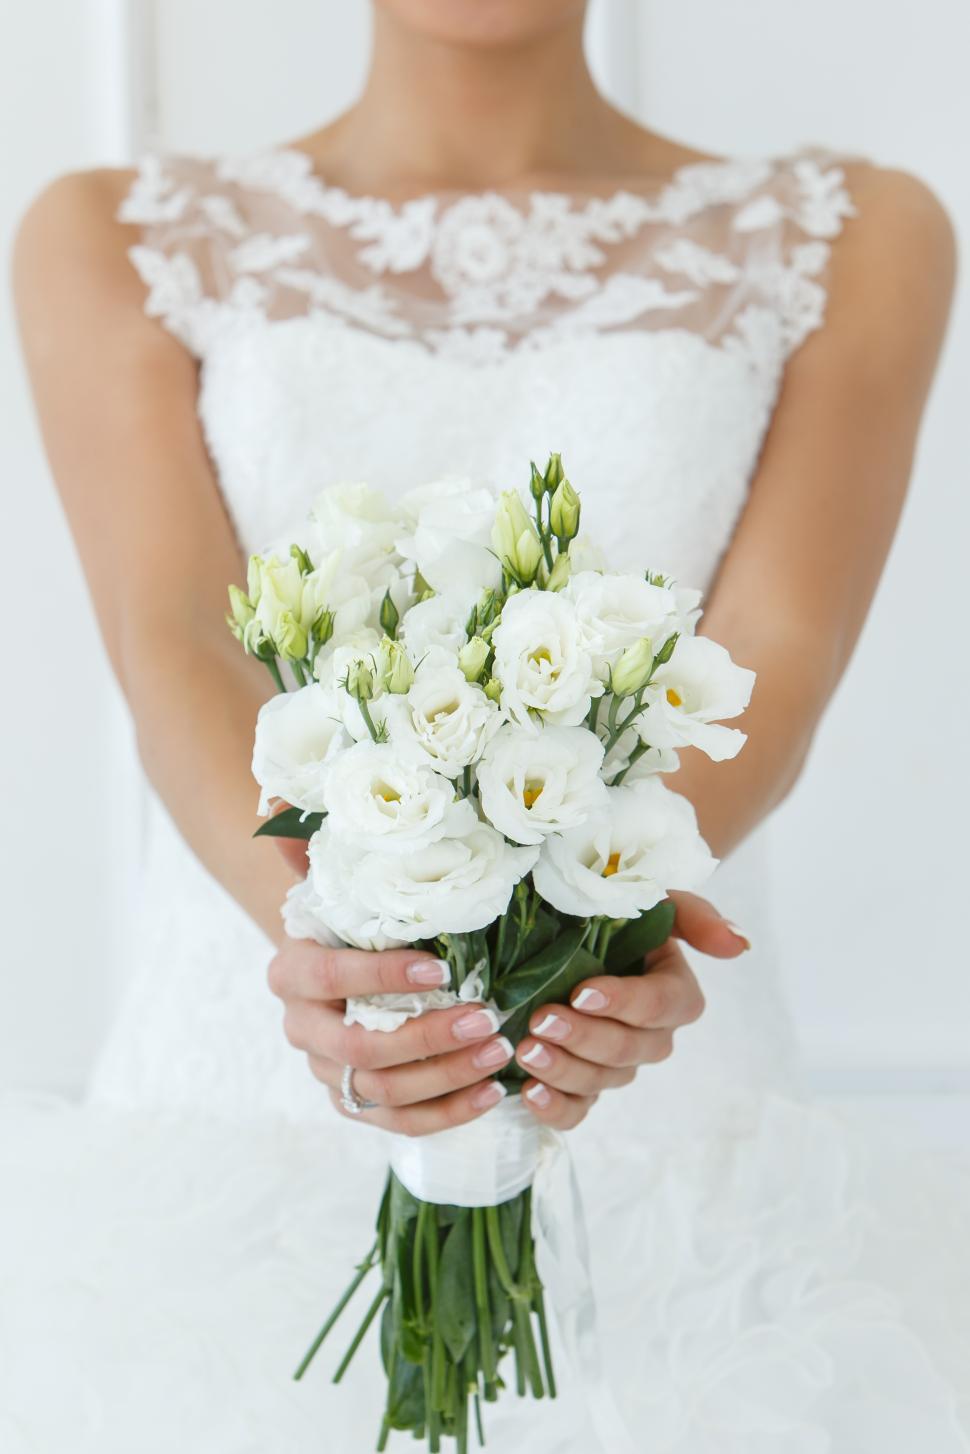 Free Image of Wedding. Beautiful bridal bouquet of flowers 